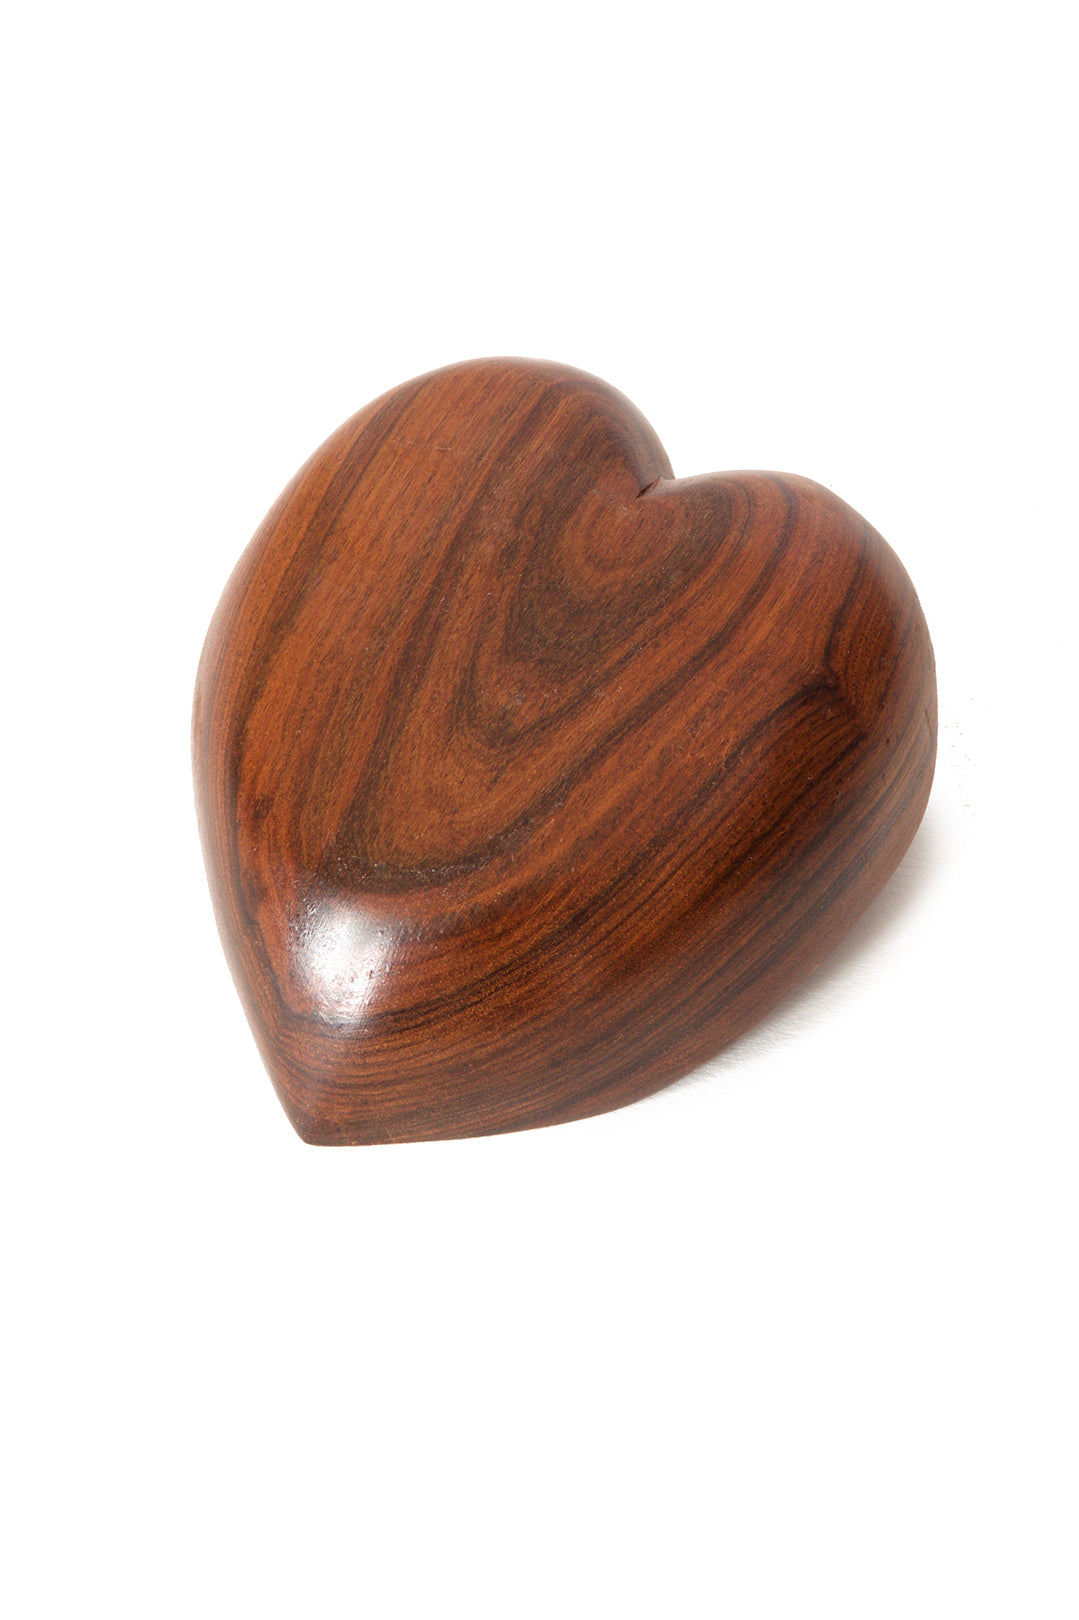 Rustic Fragrant Sandalwood Heart Token